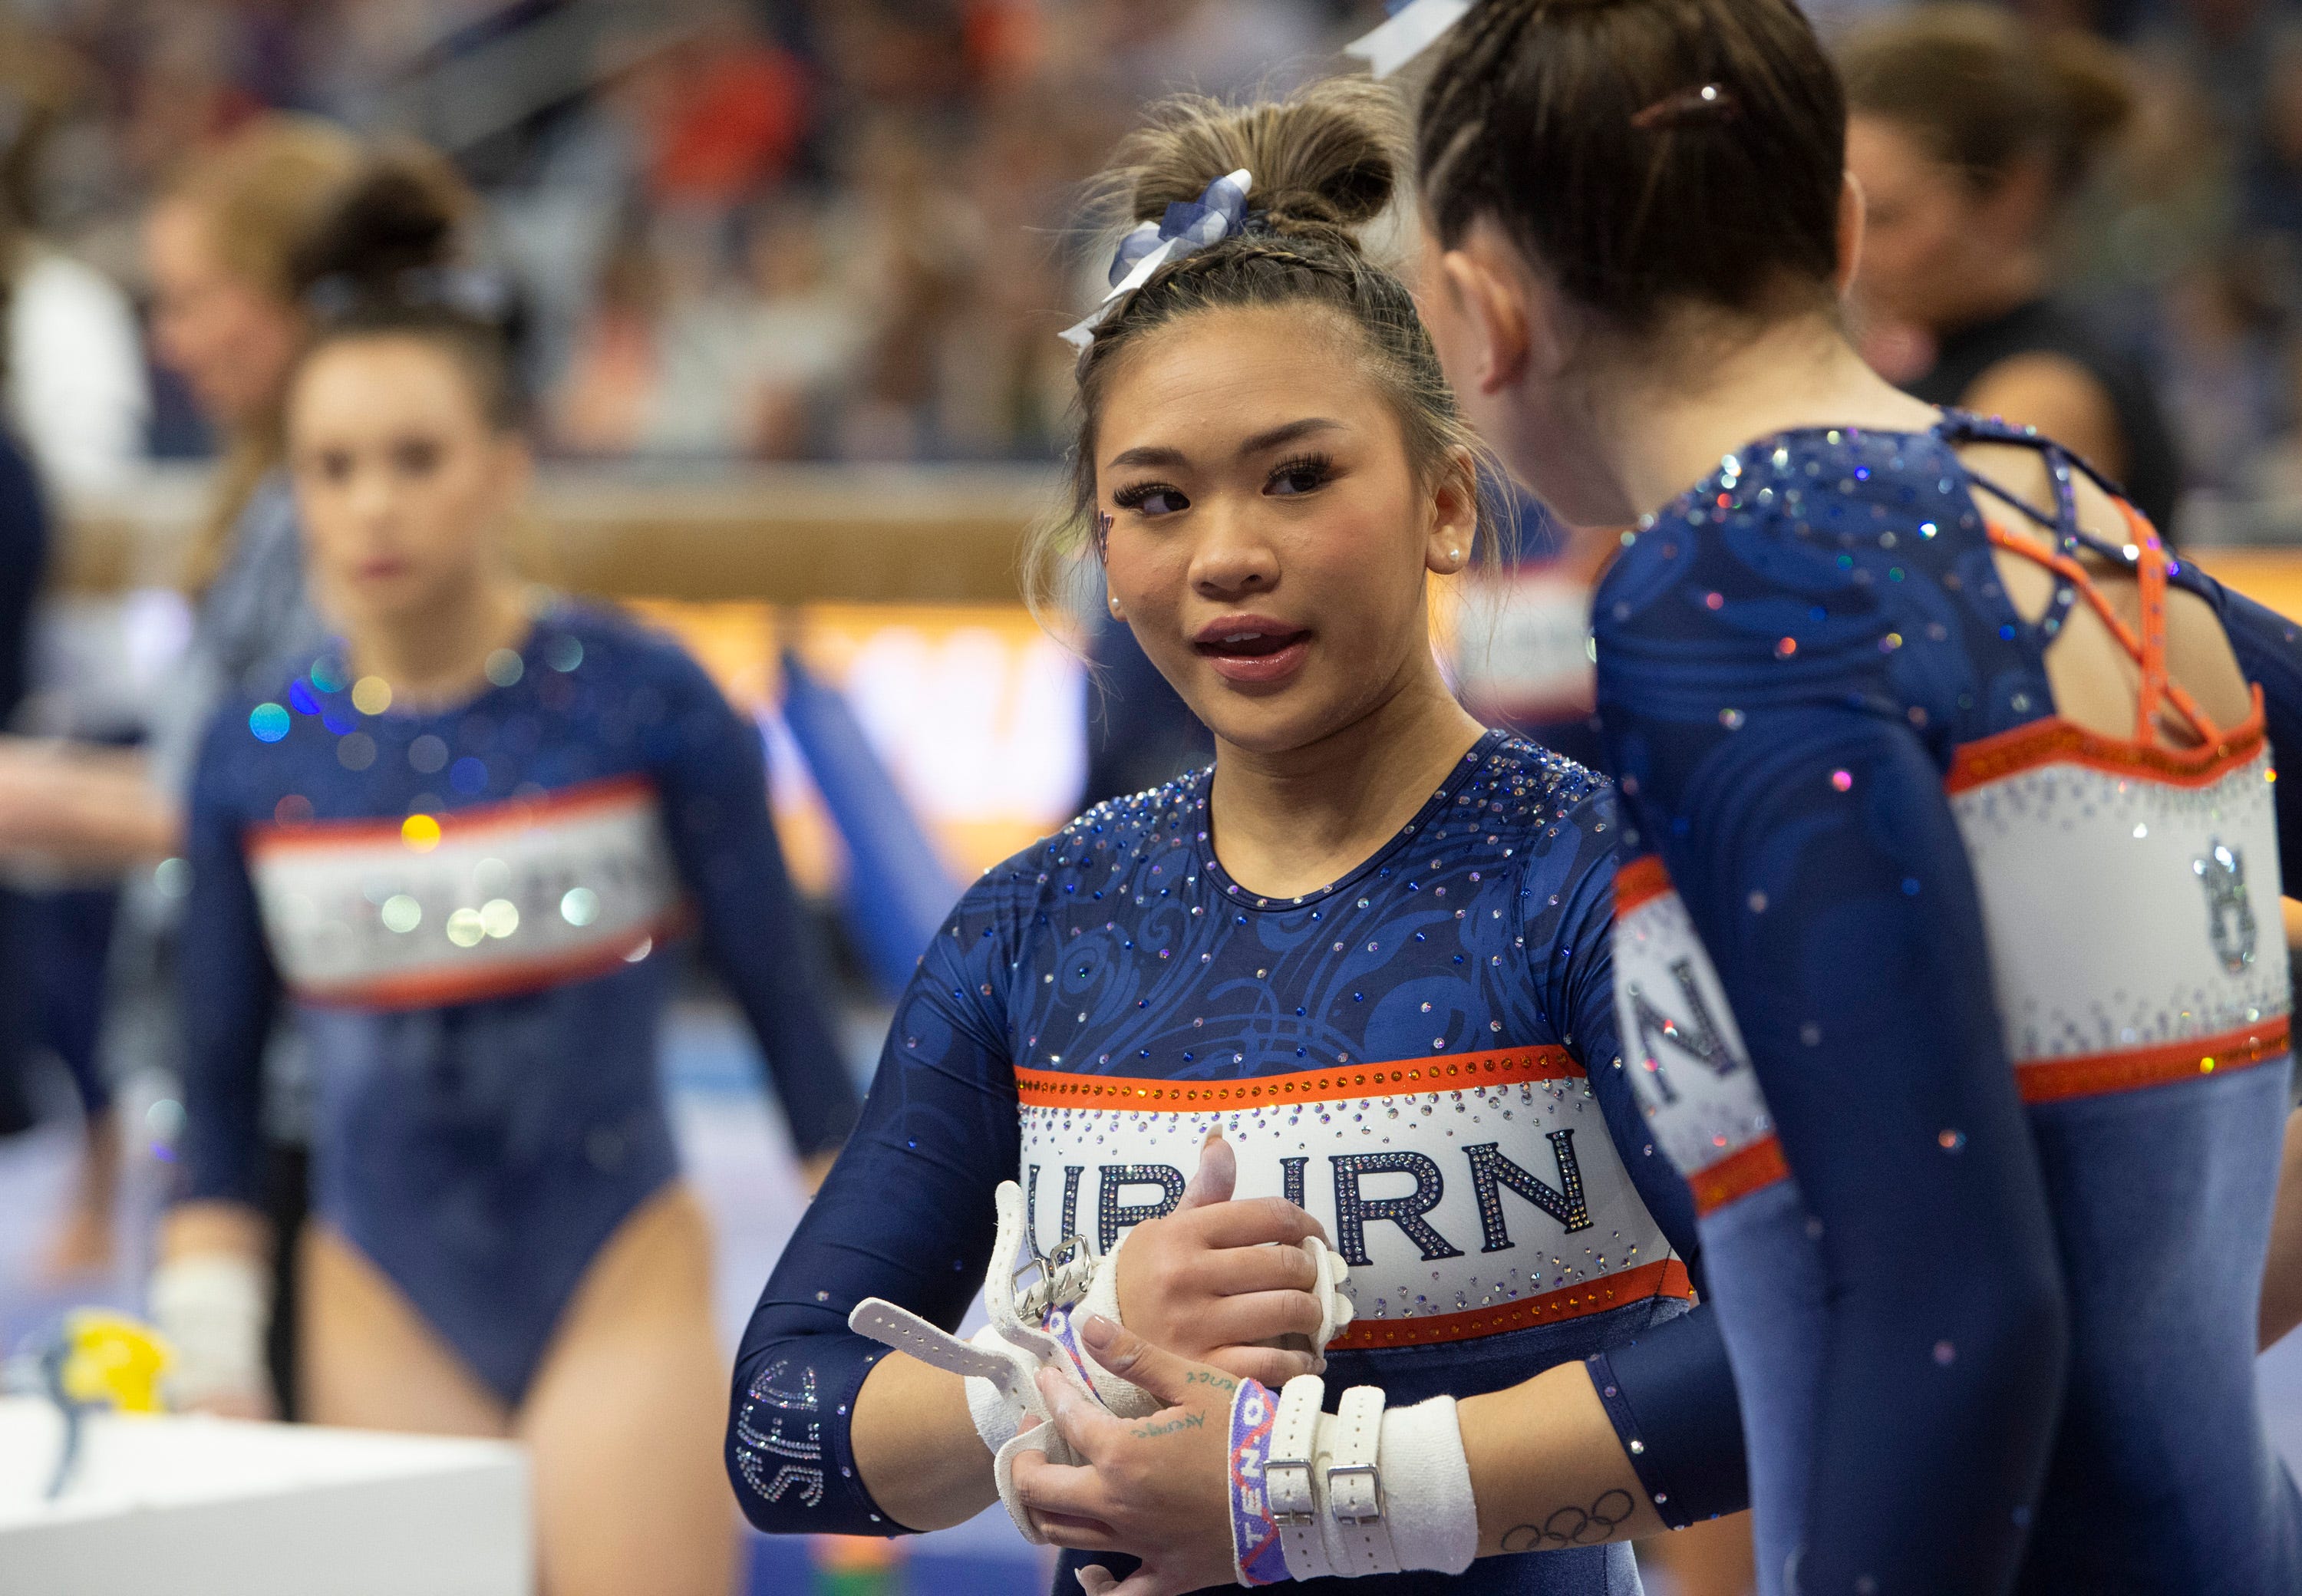 Auburn gymnastics star Suni Lee nominated for awards at 2022 ESPYs